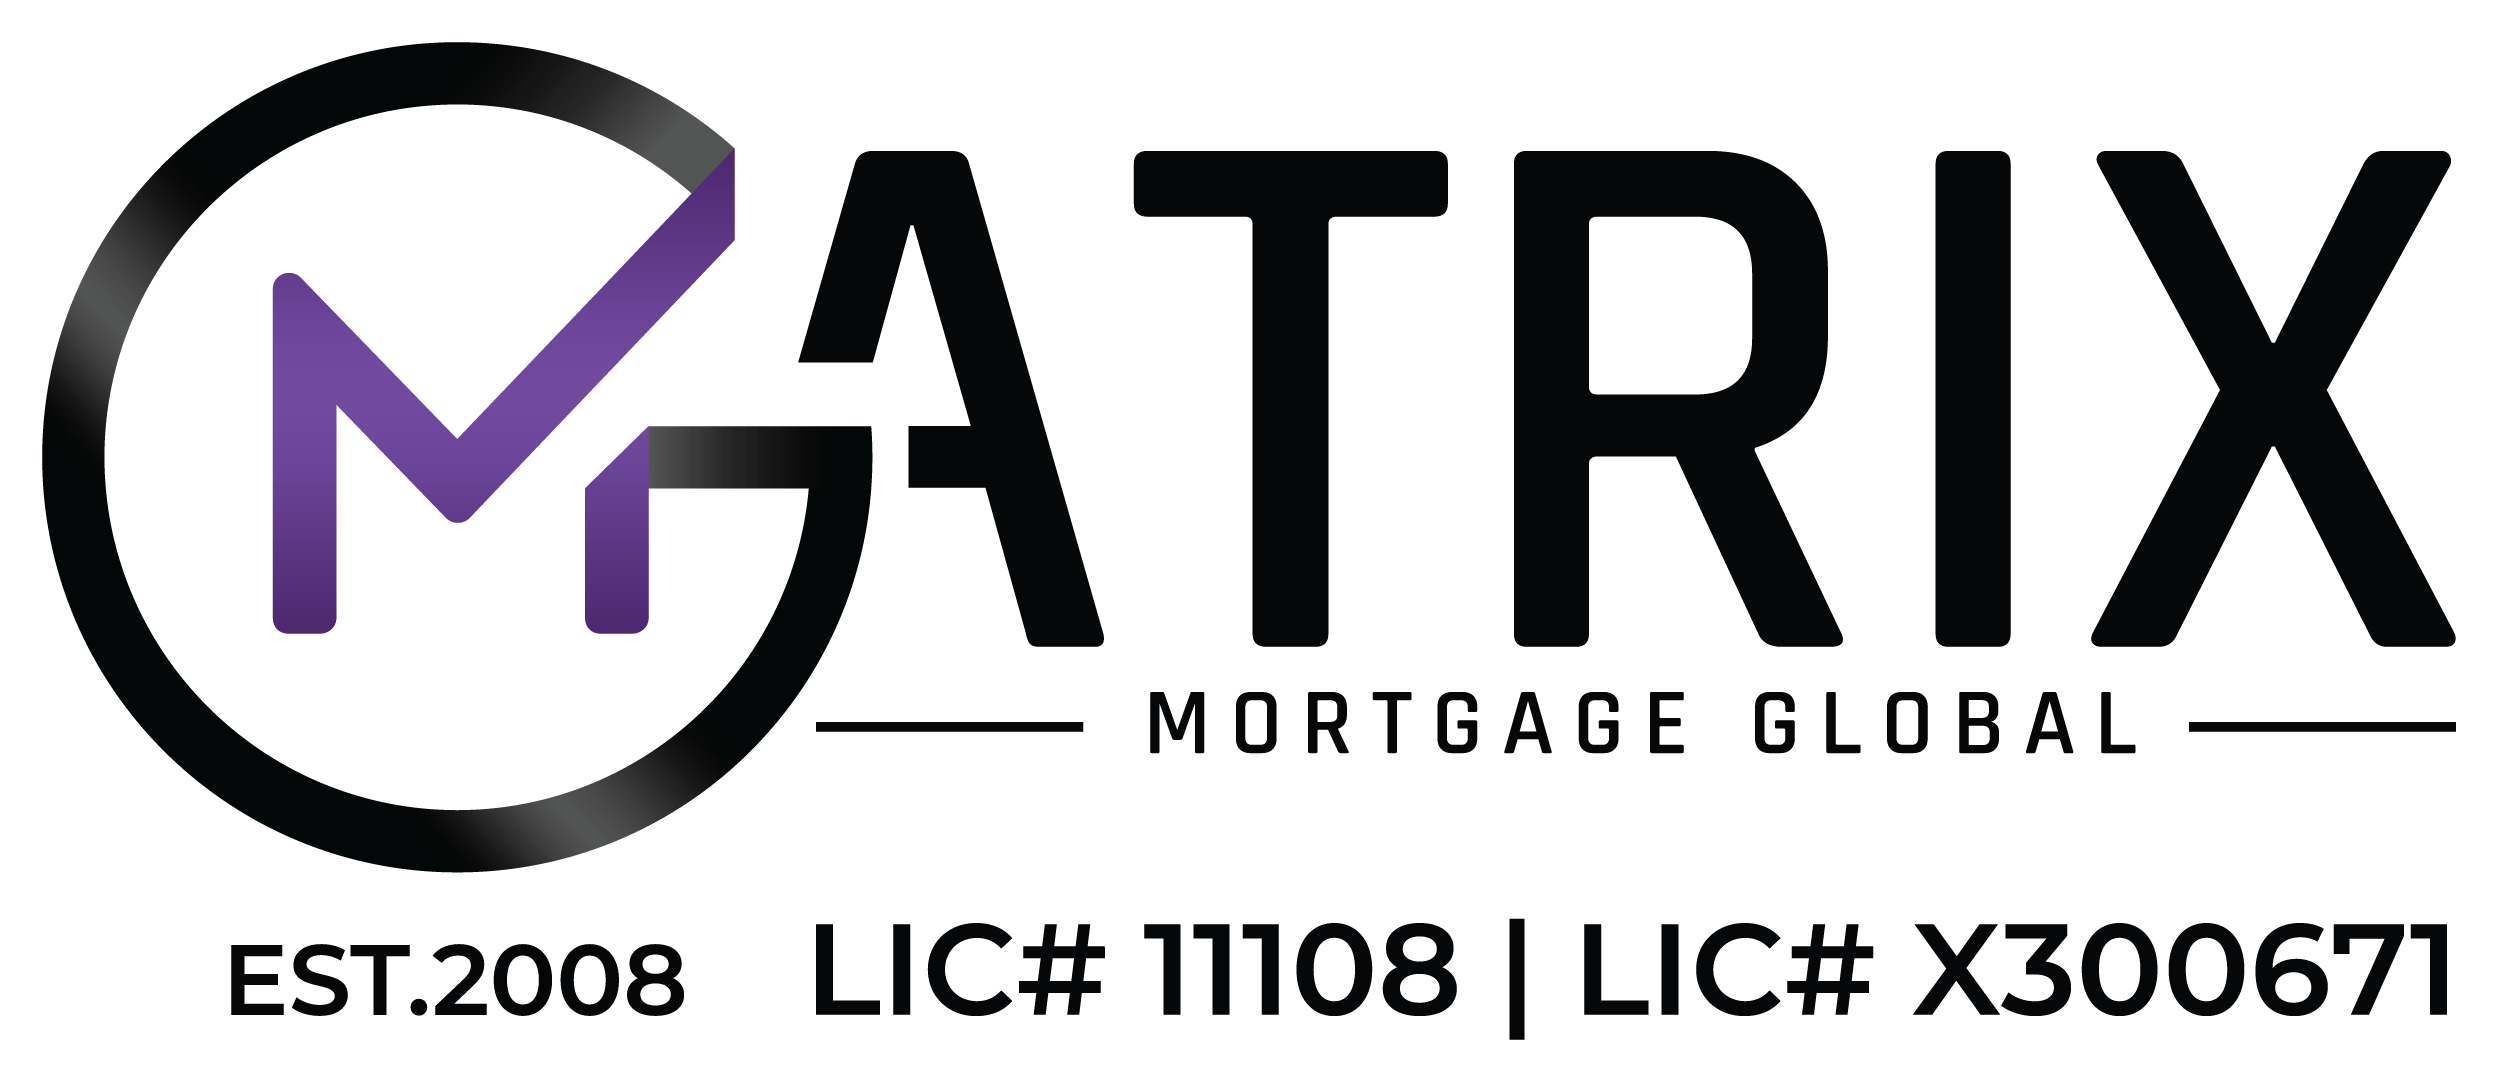 Mortgage Broker Toronto, Ontario – Matrix Mortgage Global